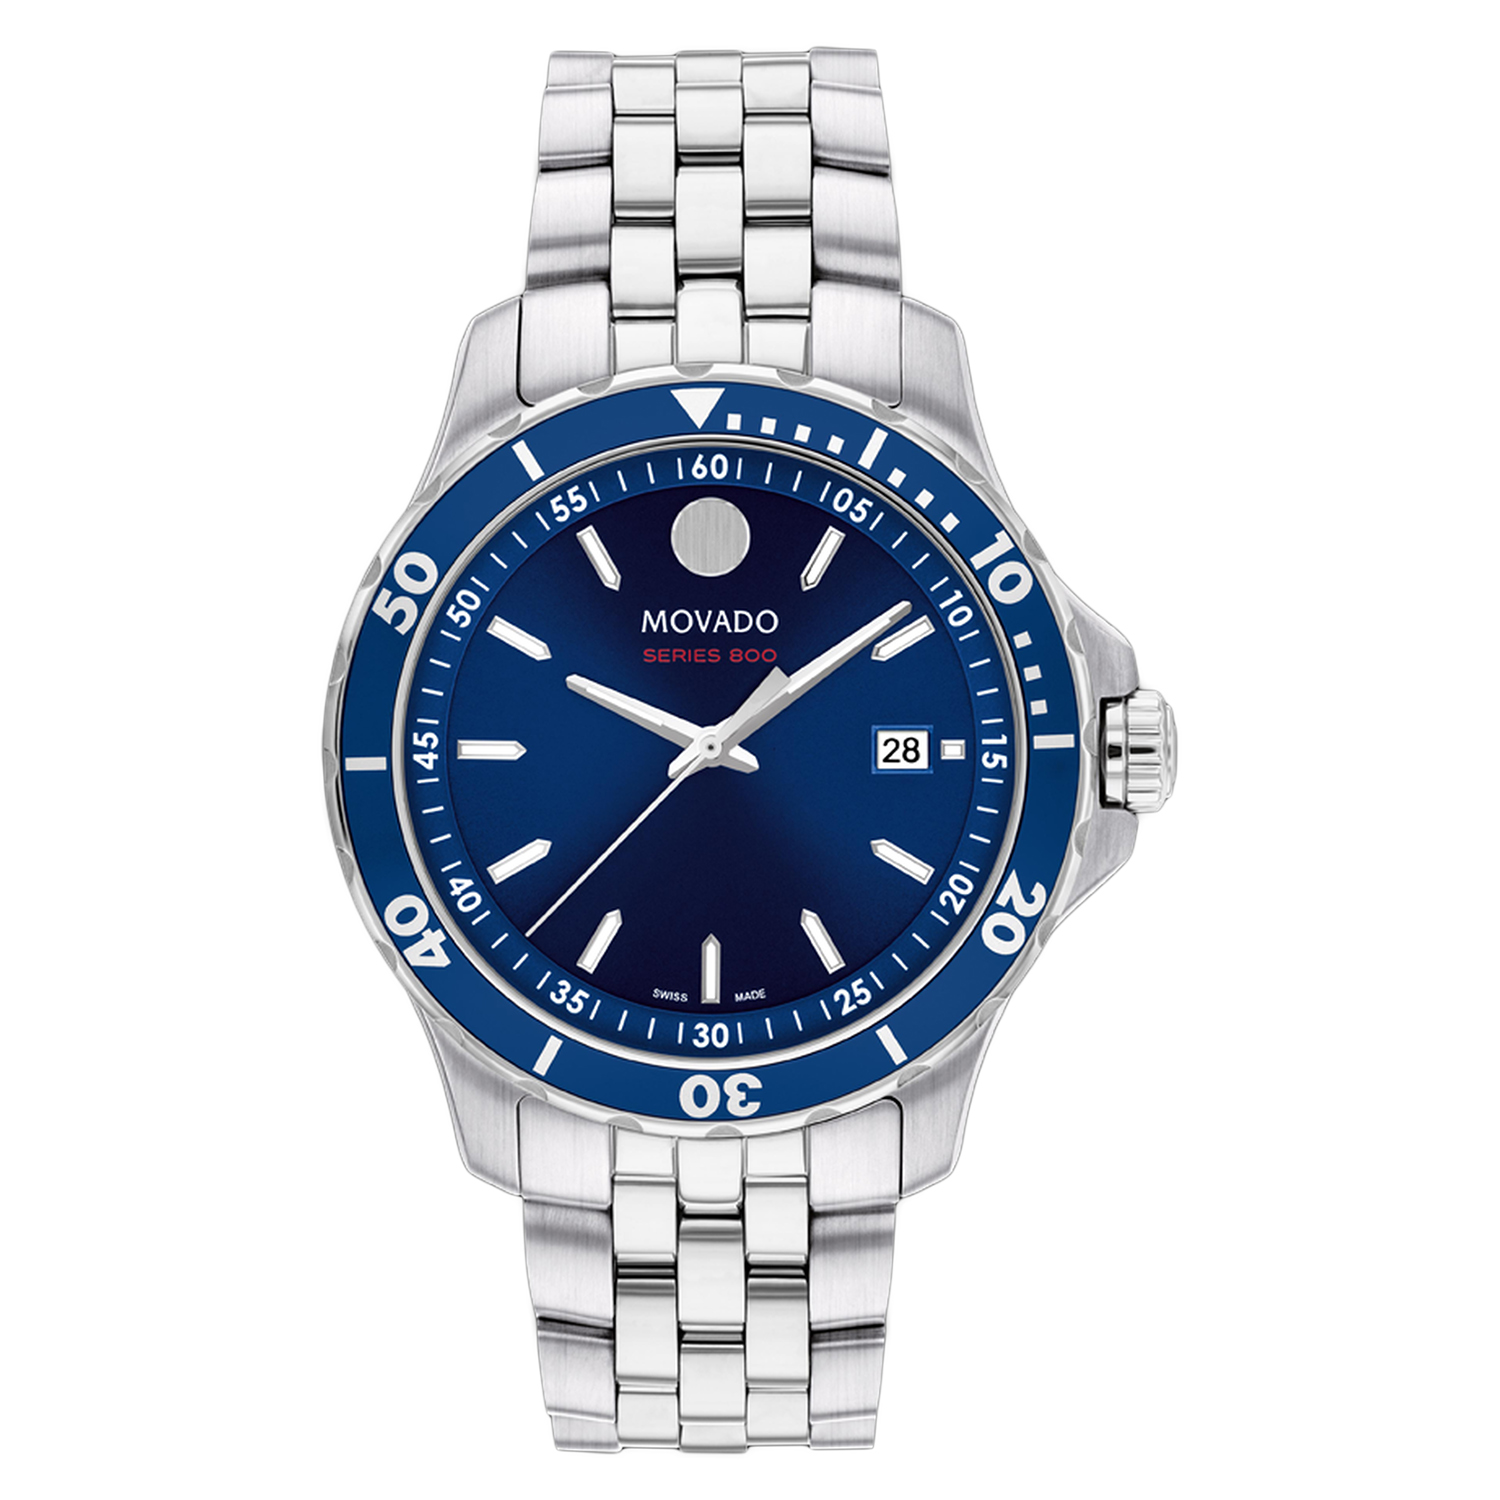 Movado Men's Series 800 Blue Dial Watch - 2600183